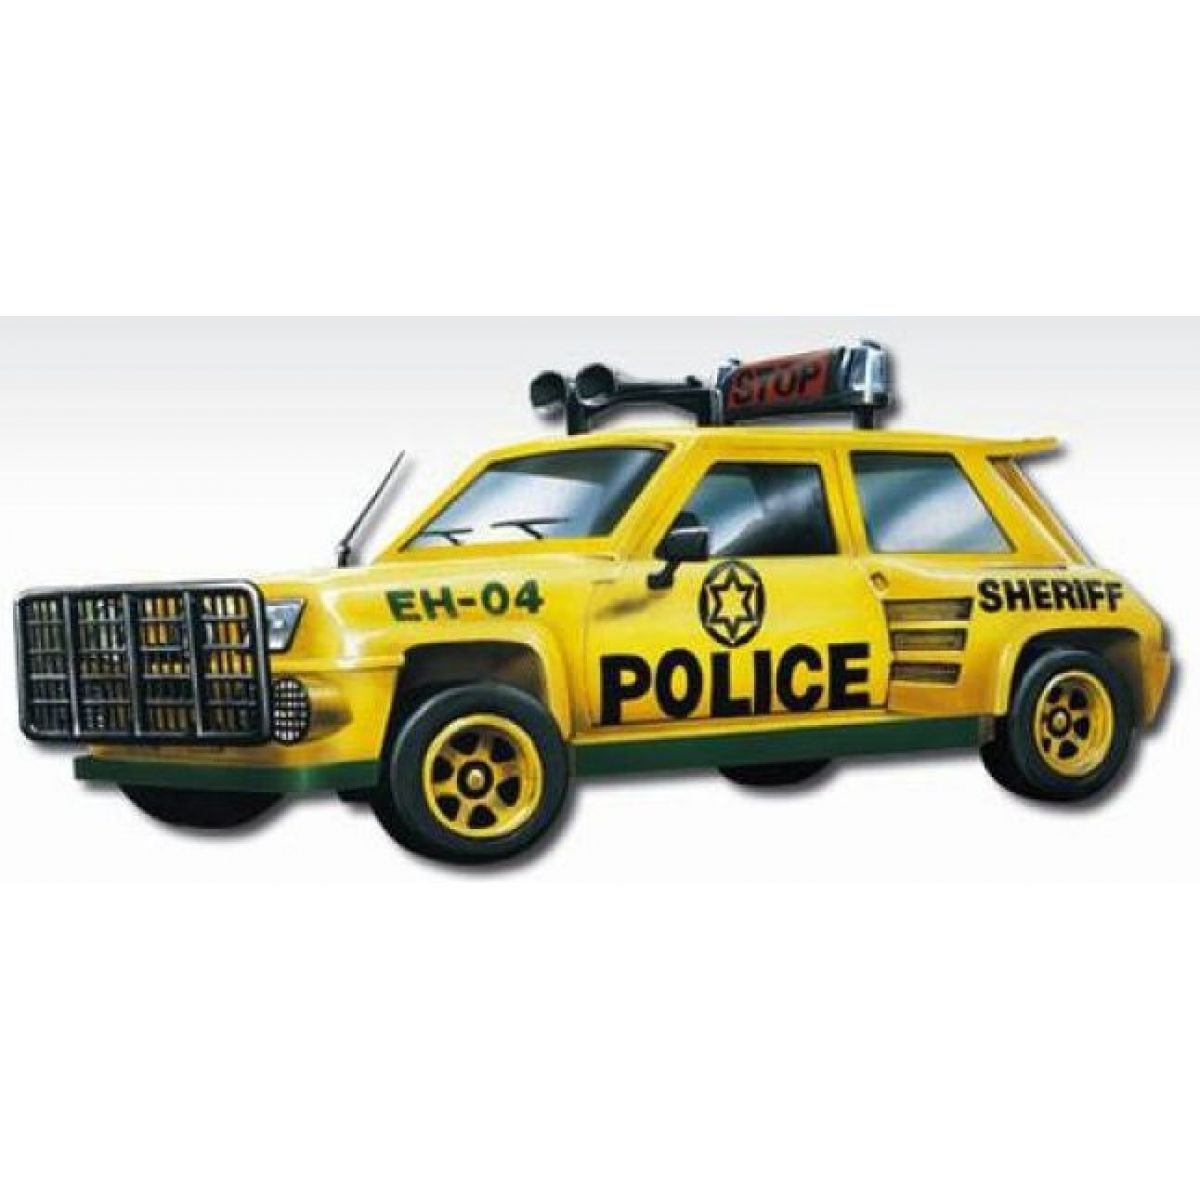 Monti System 41 Police Renault Maxi 5 Turbo